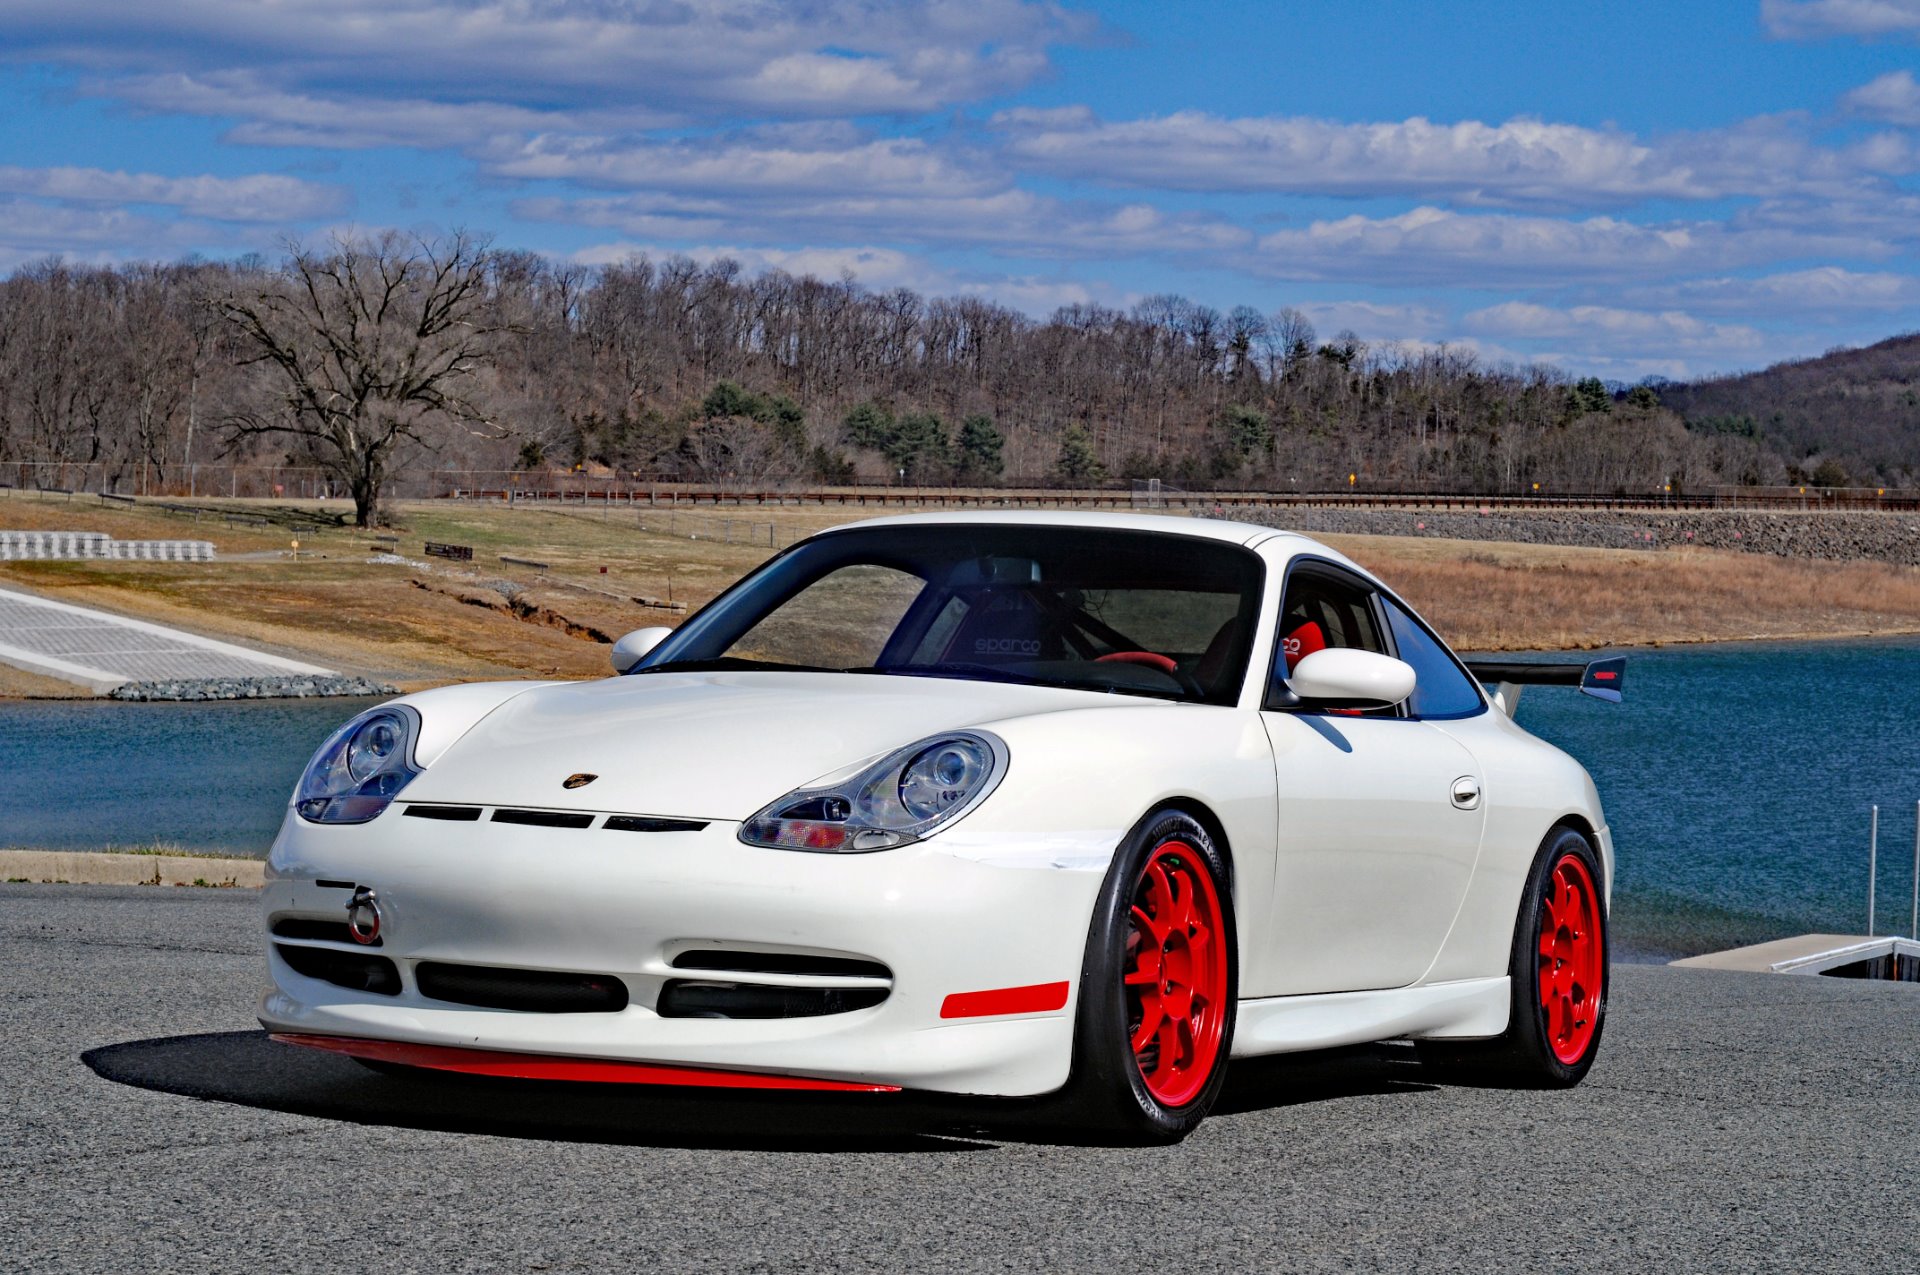 Used 2001 Porsche 911 Carrera 4 Track Car For Sale Special